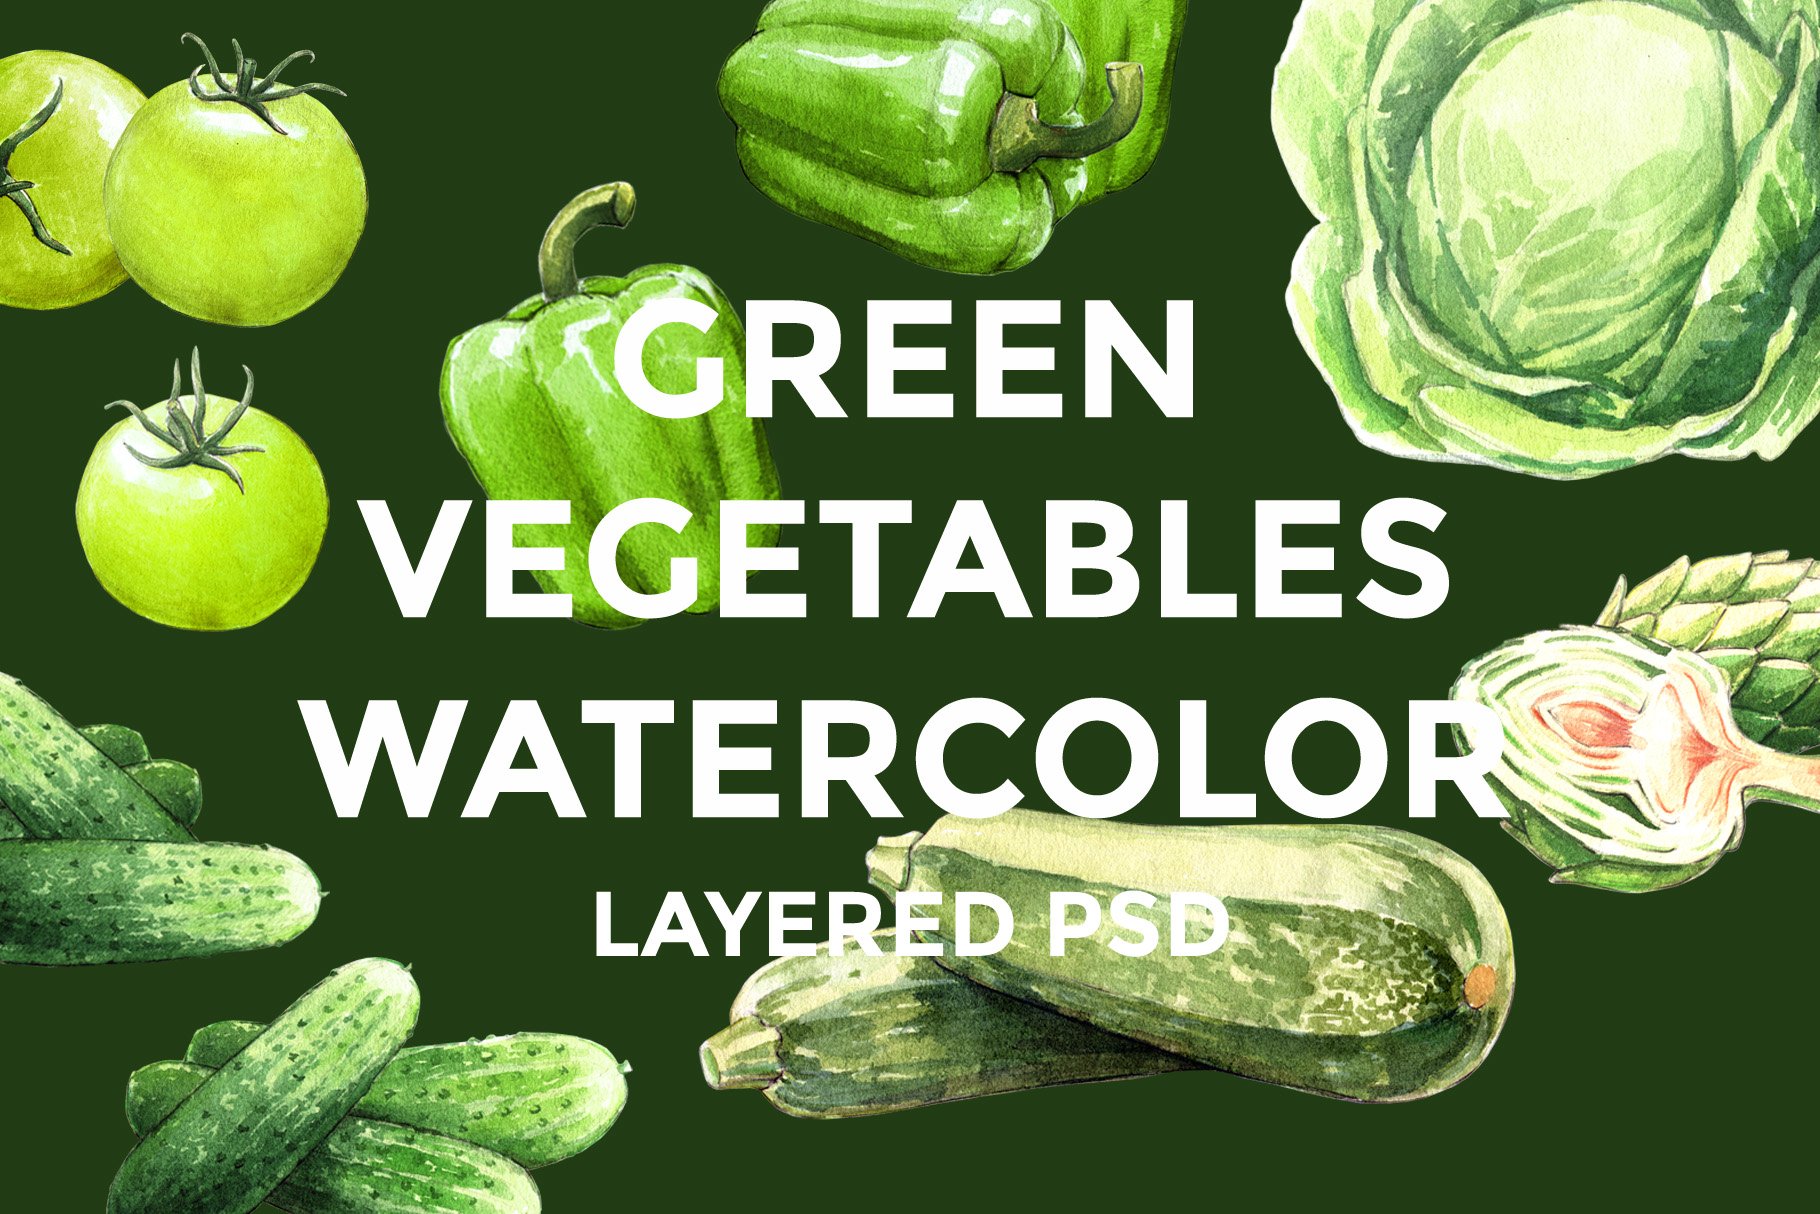 Green Vegetables watercolor big set cover image.